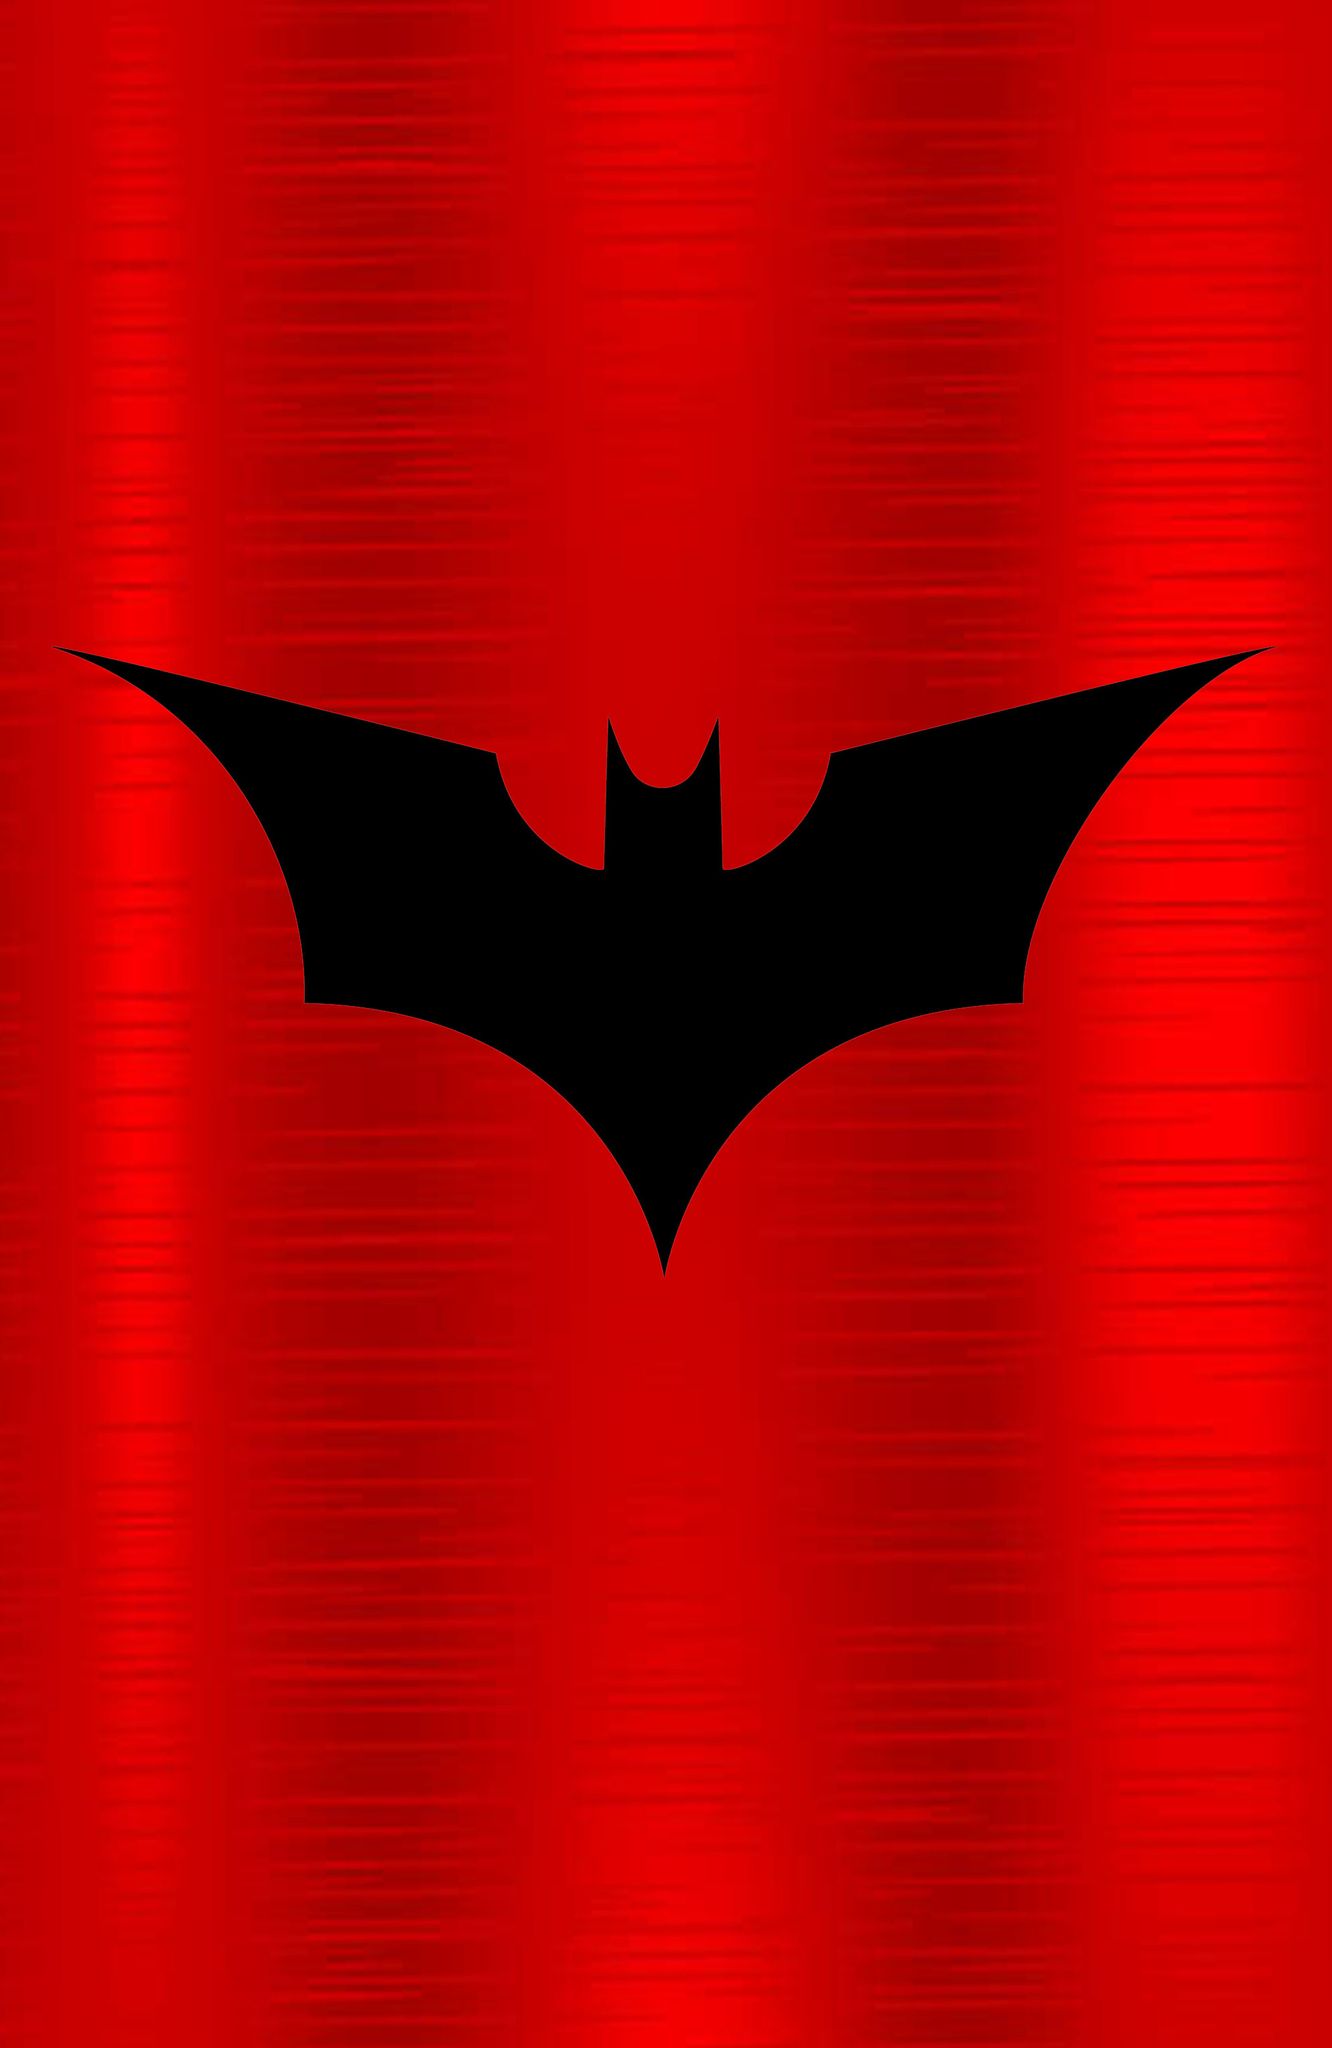 900+] Batman Wallpapers